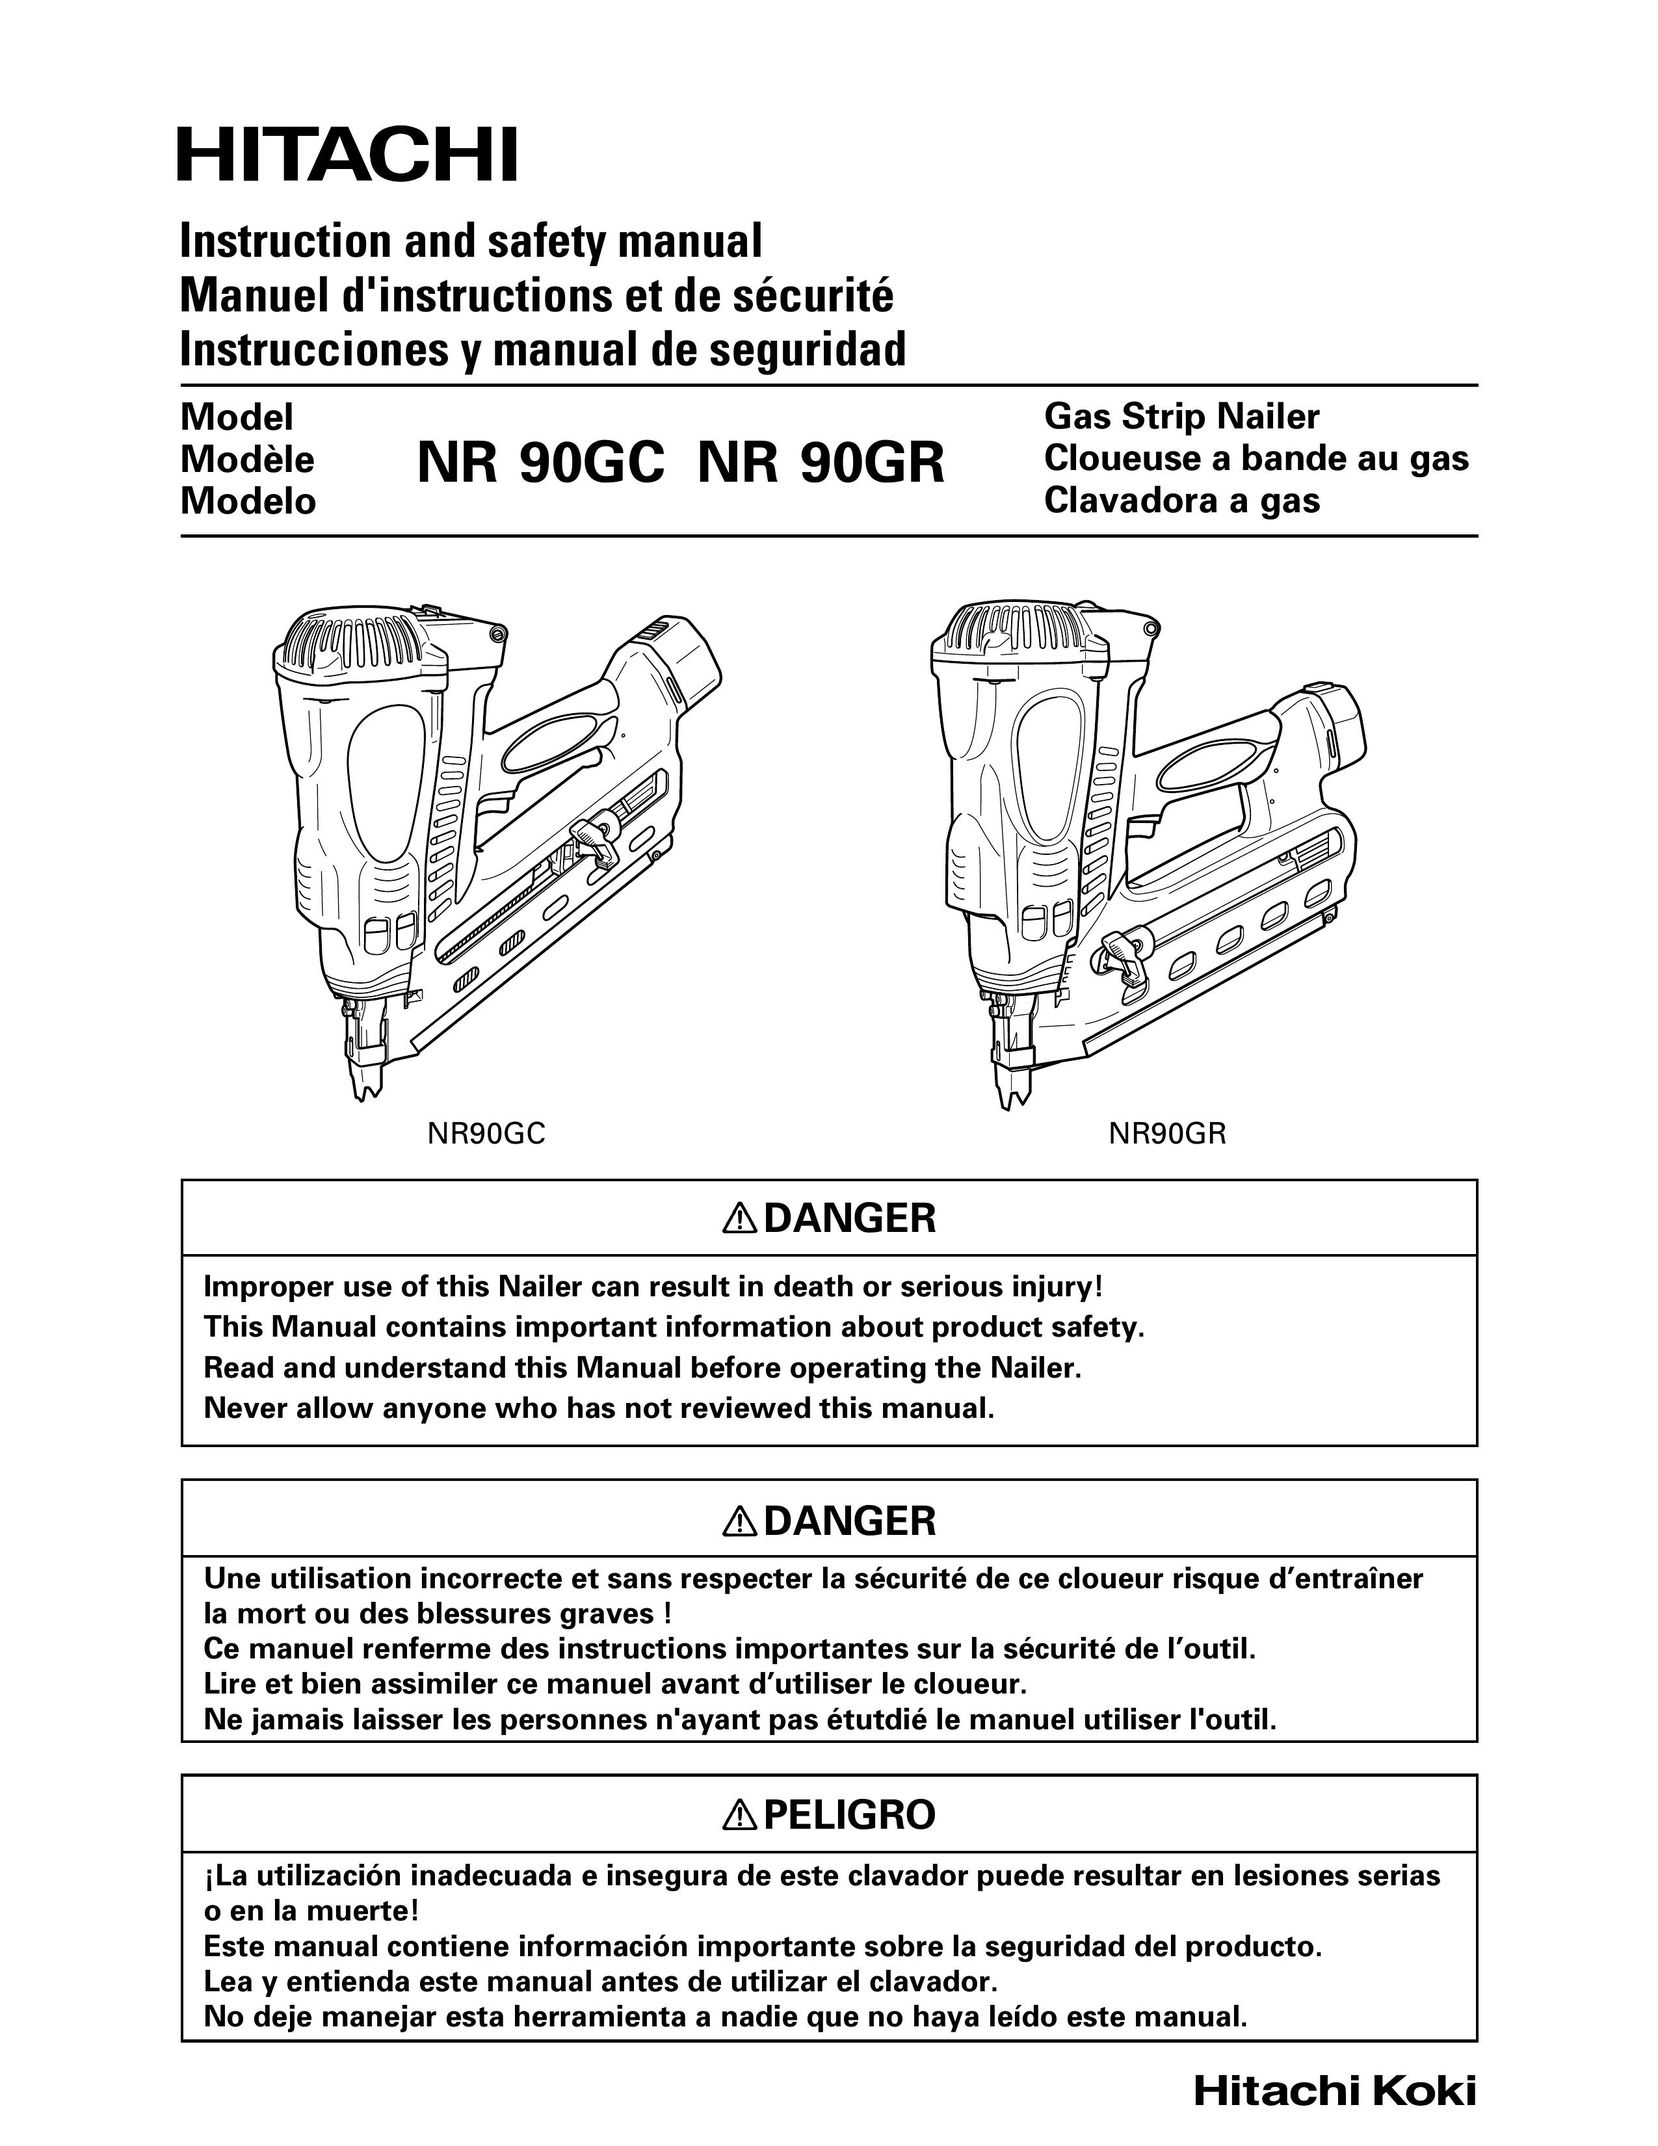 Hitachi NR 90GR Nail Gun User Manual